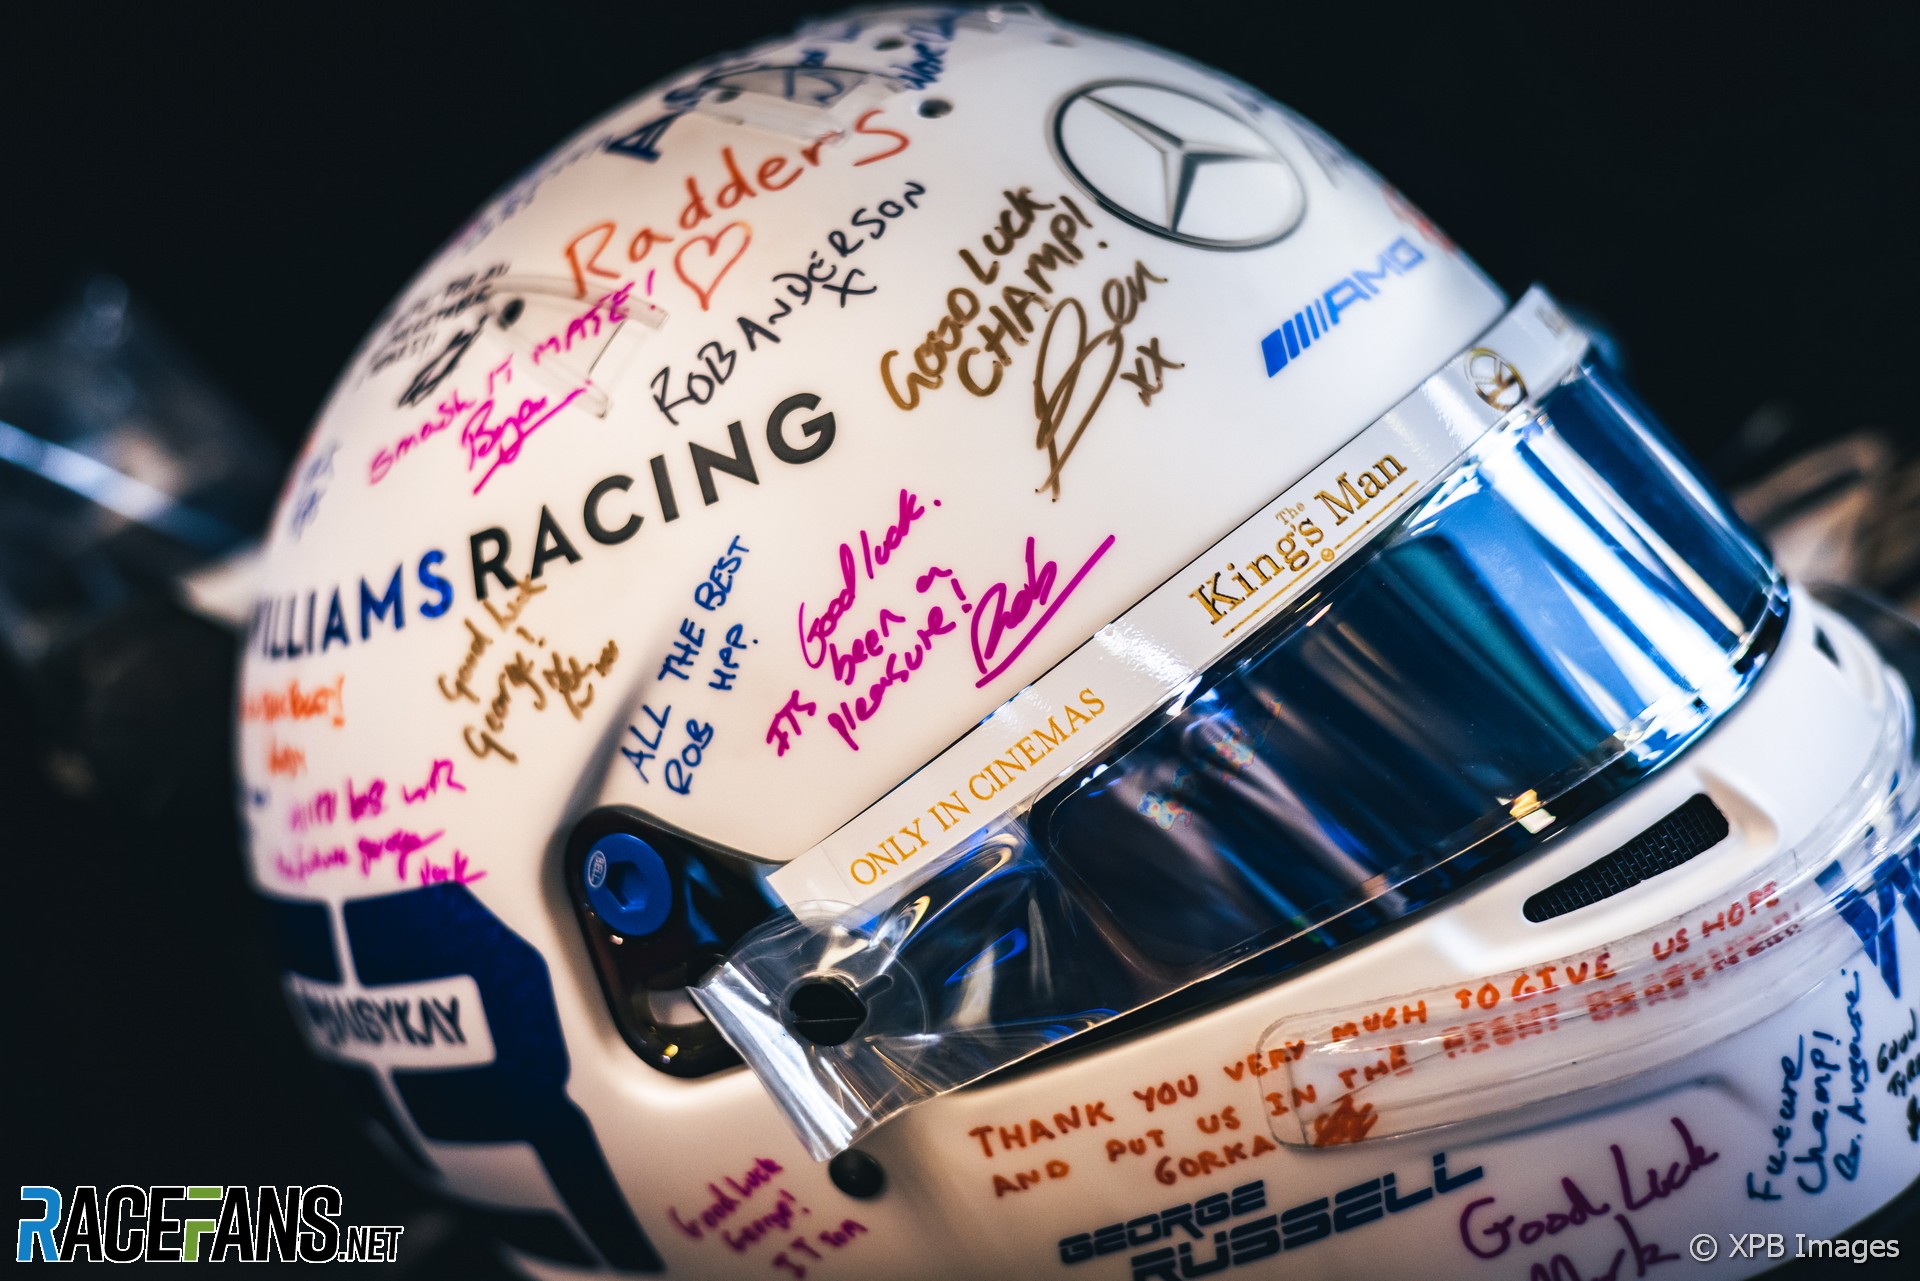 George Russell's 2021 Abu Dhabi Grand Prix helmet